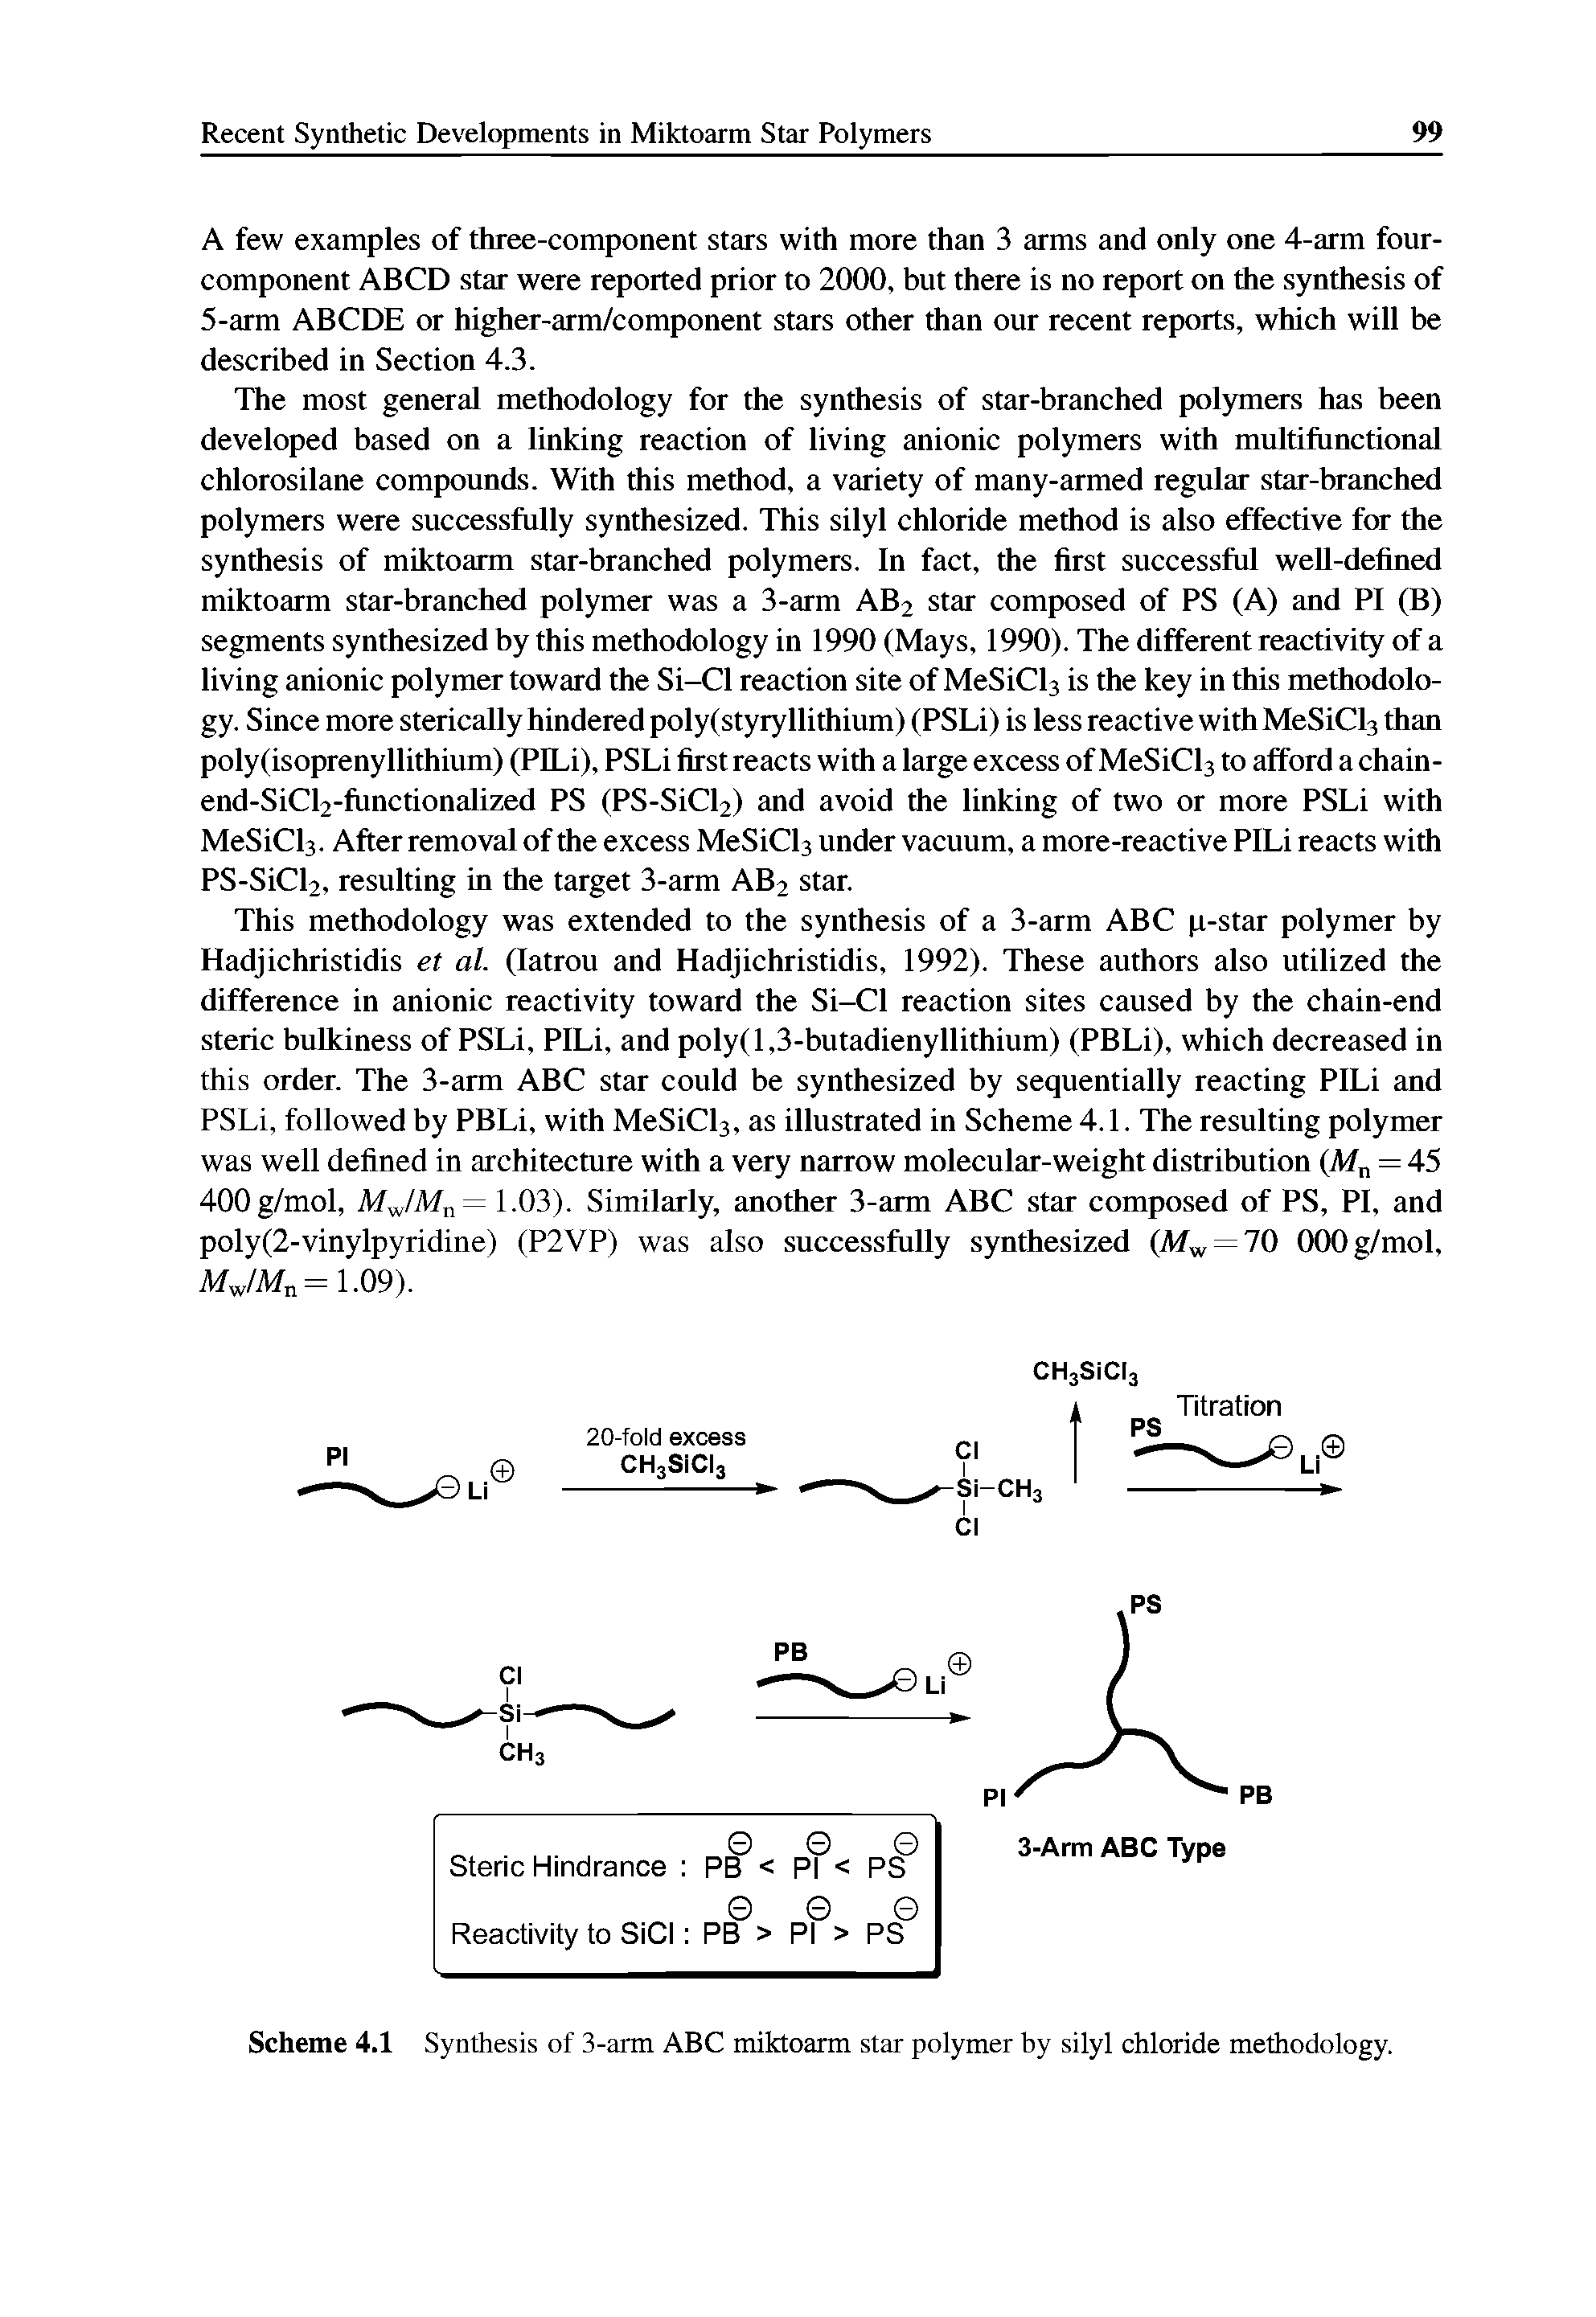 Scheme 4.1 Synthesis of 3-arm ABC miktoarm star polymer by silyl chloride methodology.